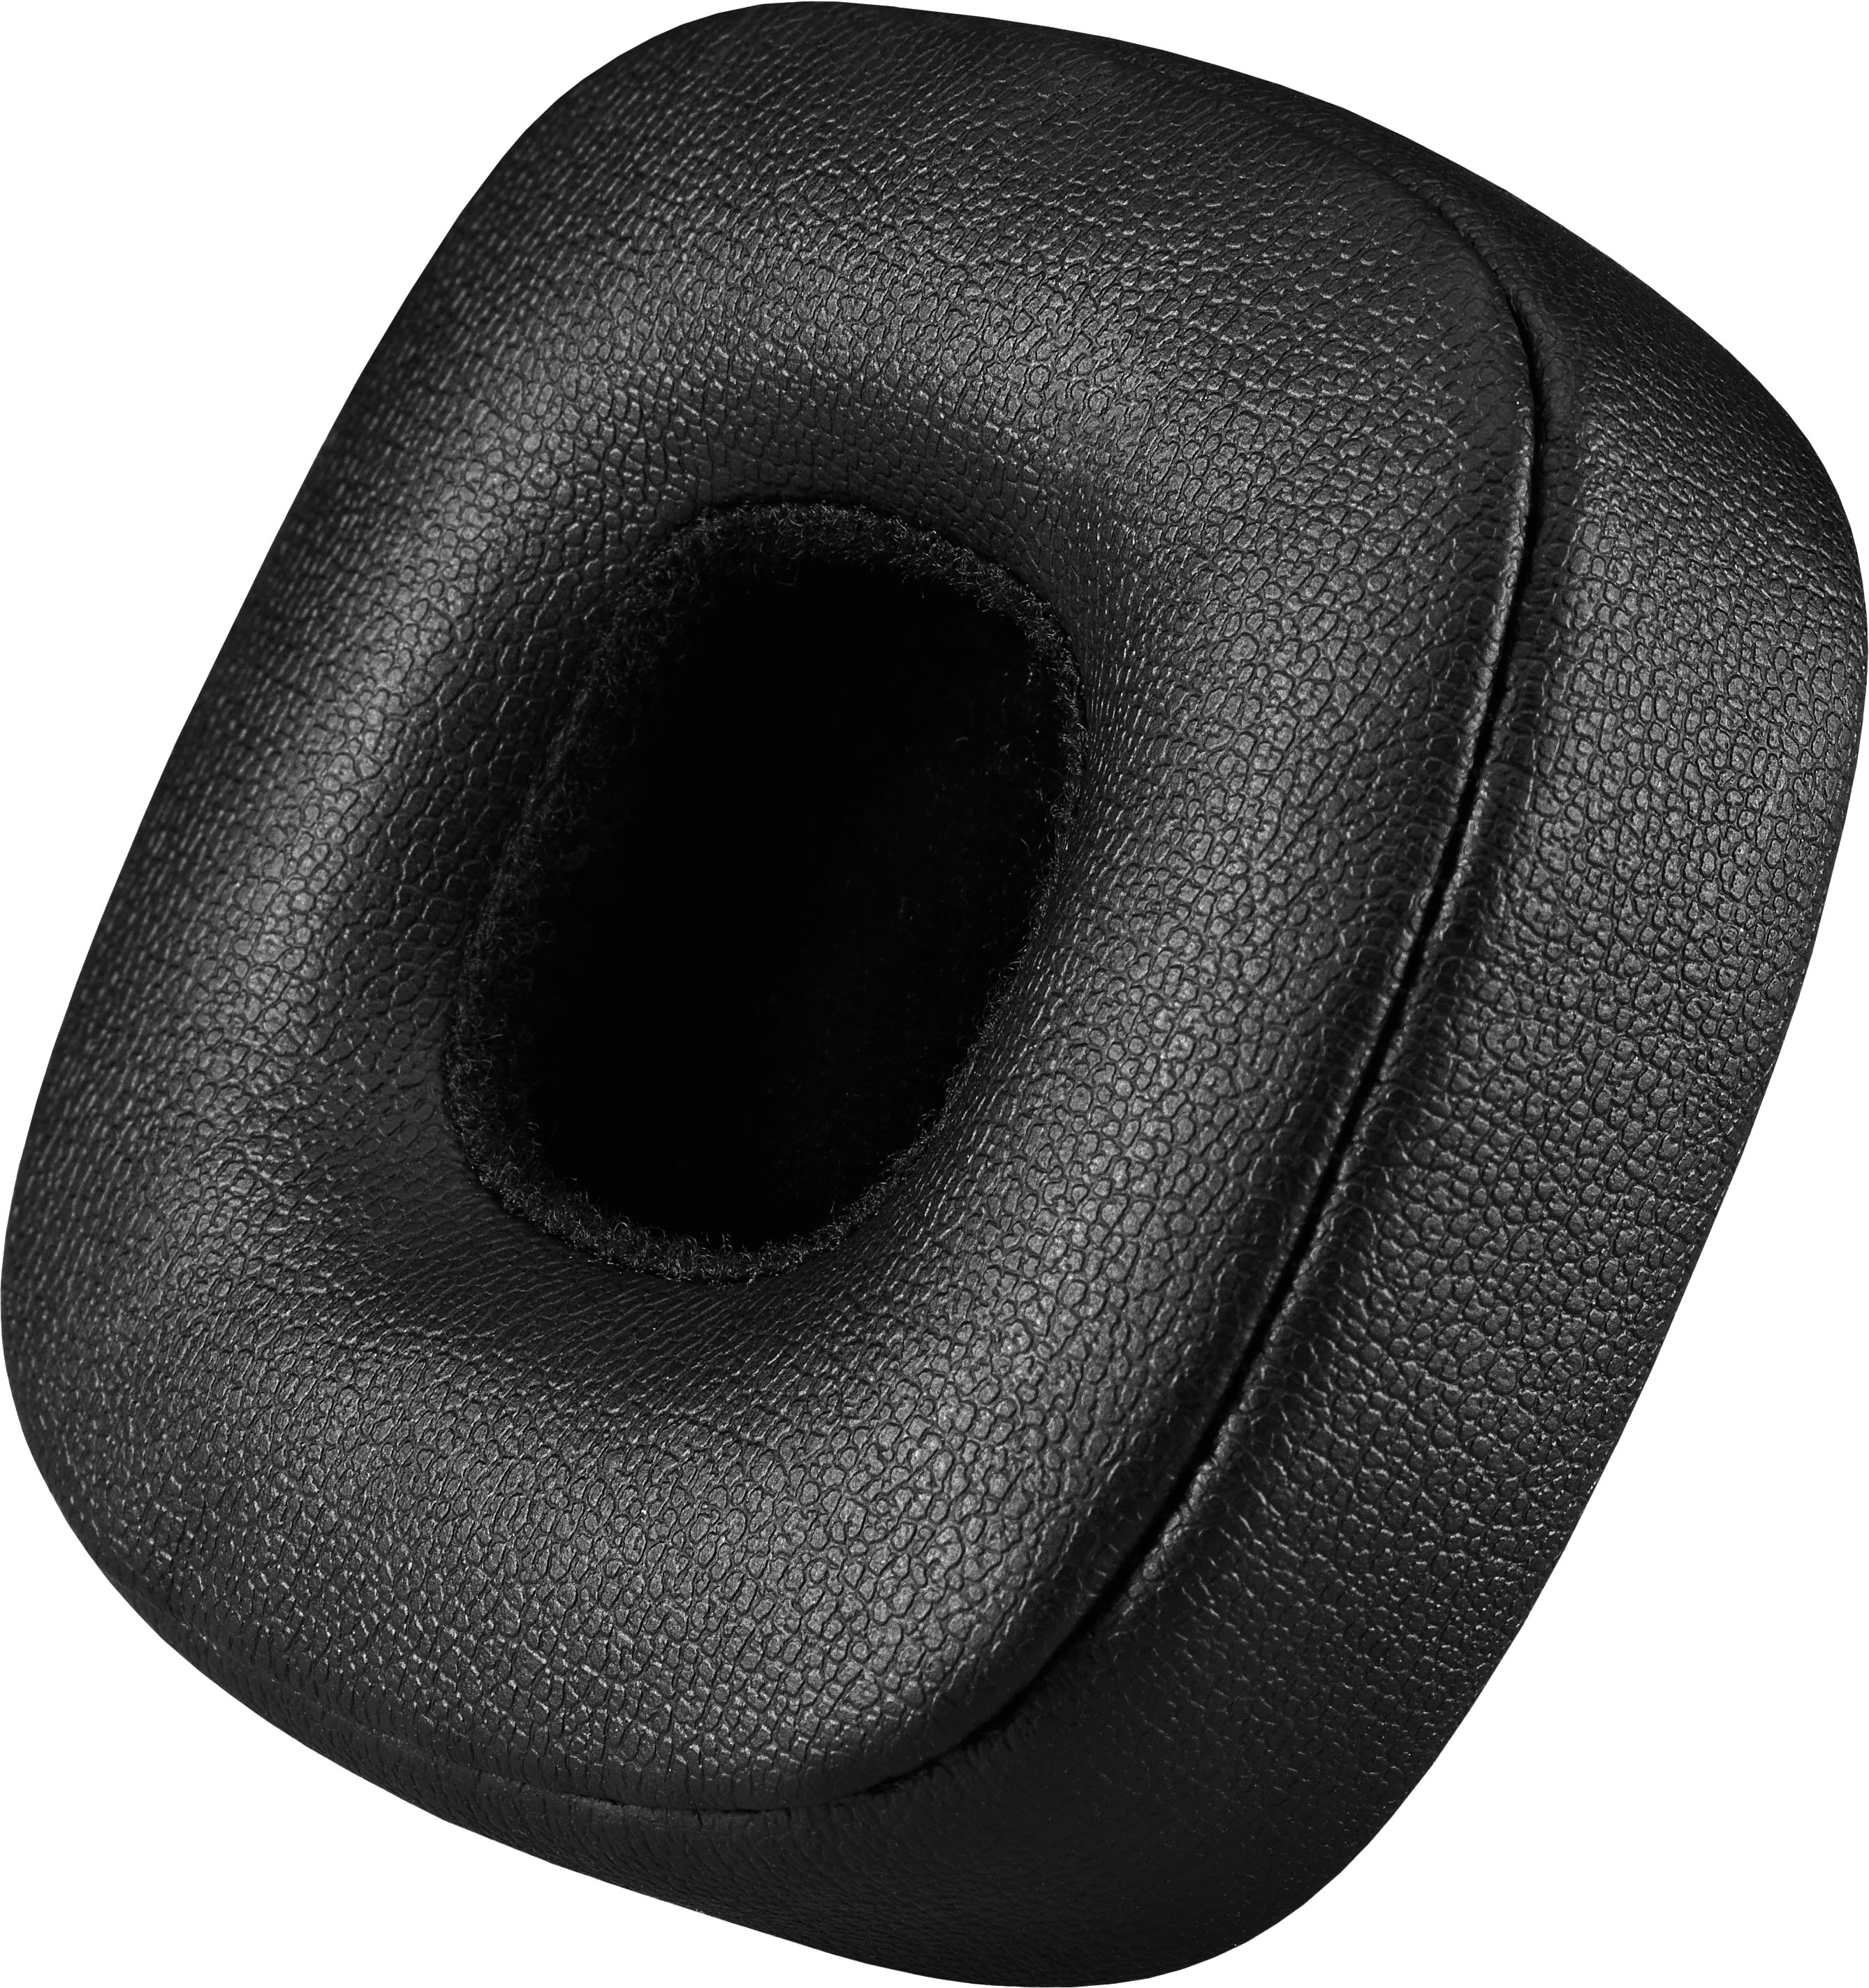 Marshall Major IV Bluetooth Headphone with wireless charging Black 1005773  - Best Buy